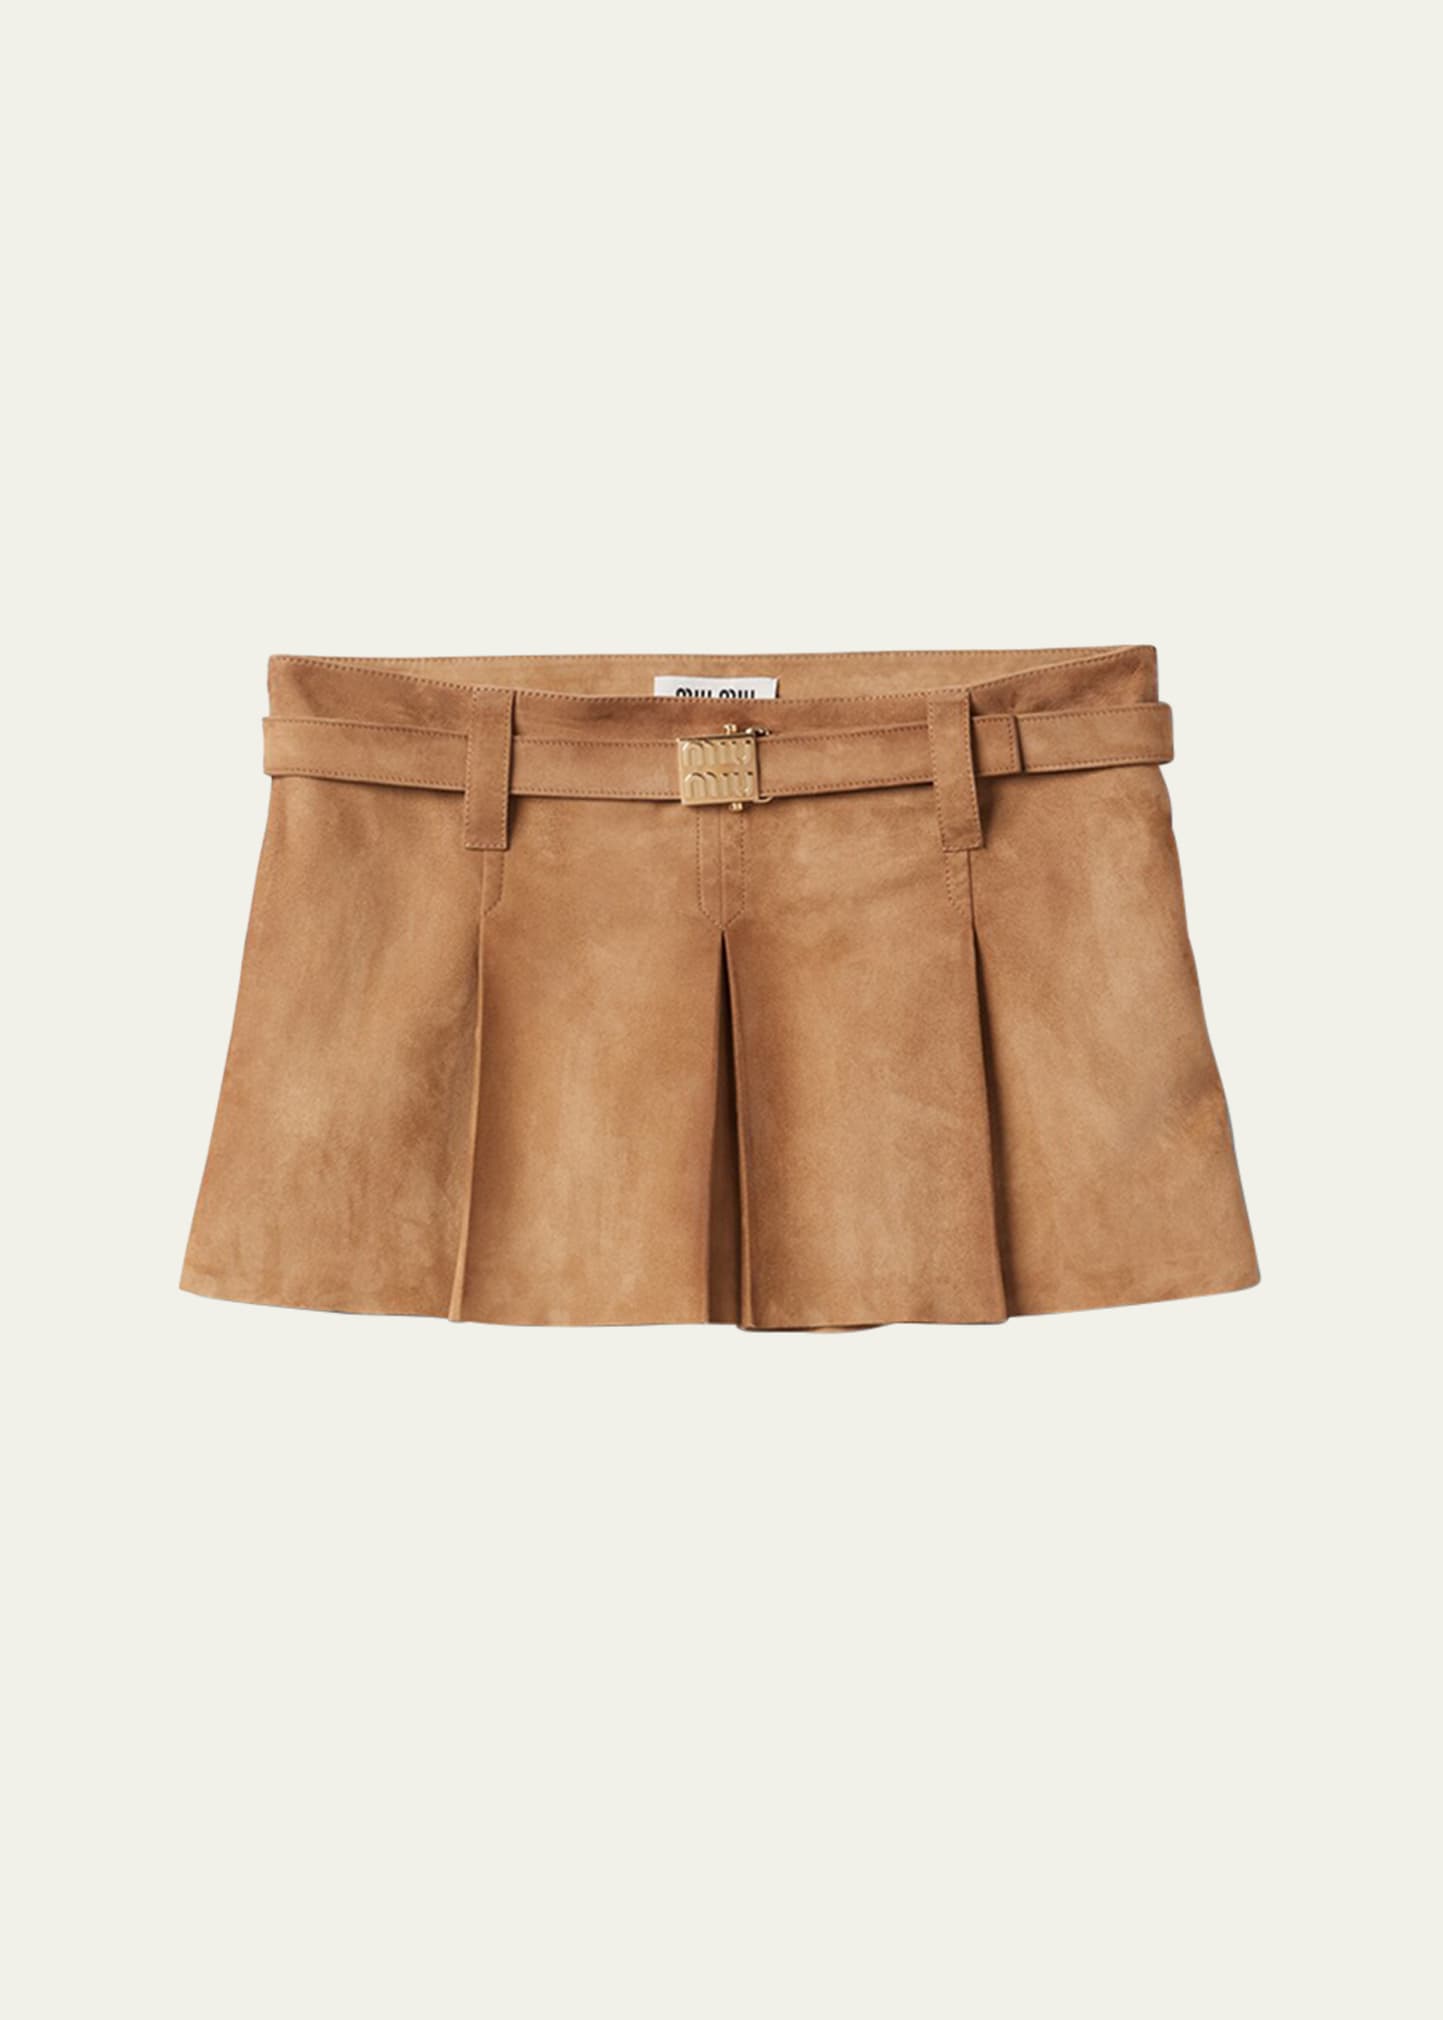 Miu Miu Large Pleated Leather Mini Skirt In Neutral